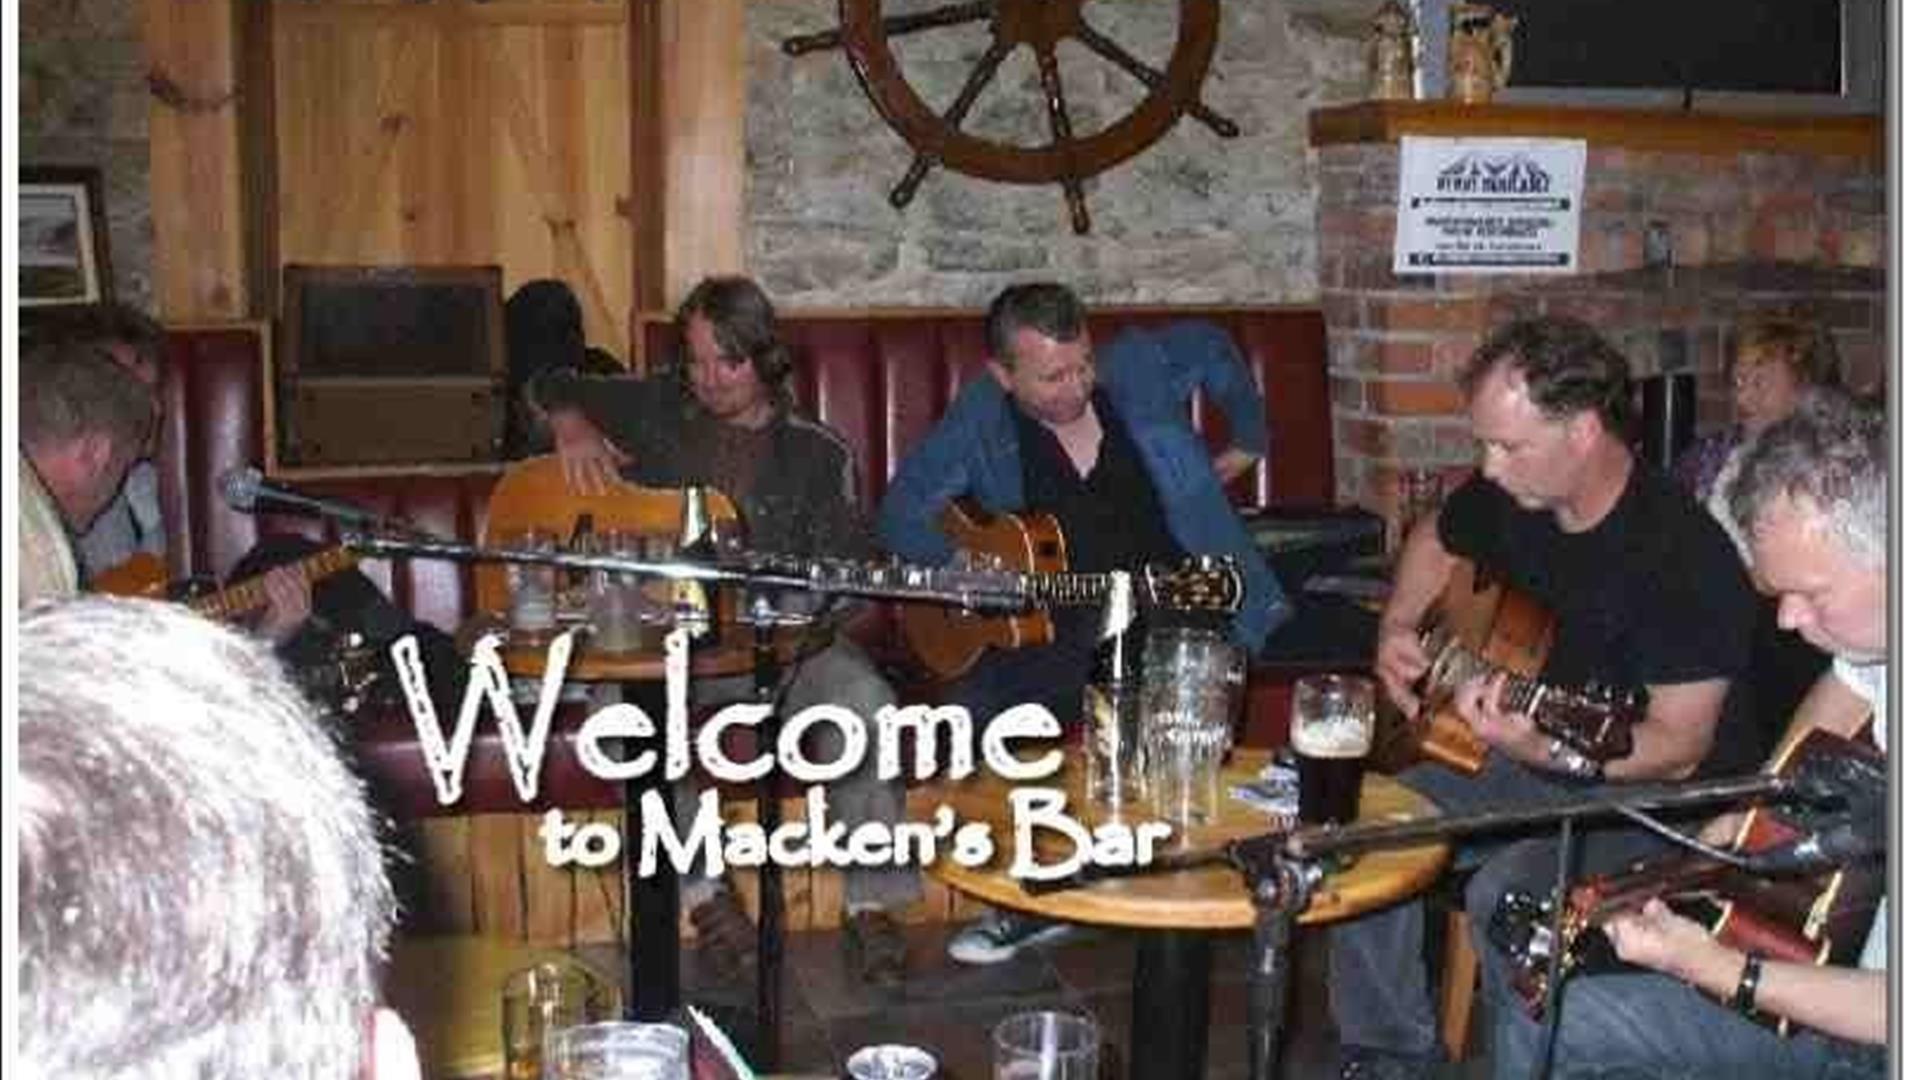 Mackens Bar